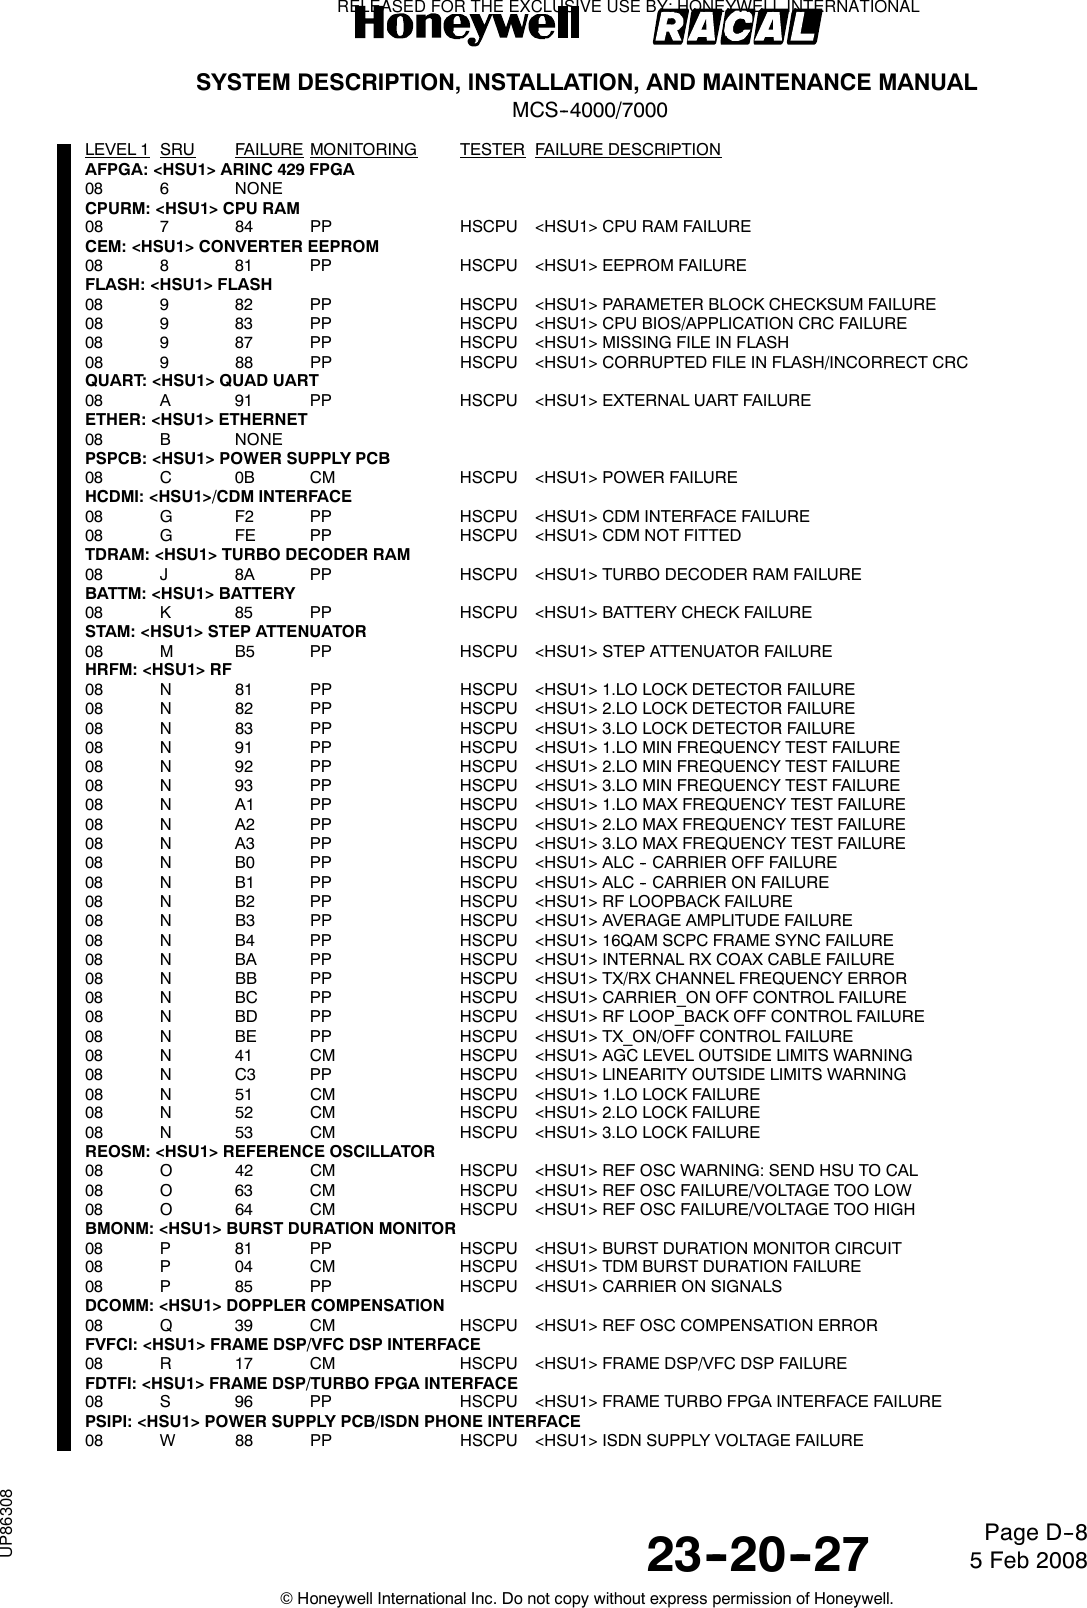 SYSTEM DESCRIPTION, INSTALLATION, AND MAINTENANCE MANUALMCS--4000/700023--20--27 5 Feb 2008©Honeywell International Inc. Do not copy without express permission of Honeywell.Page D--8LEVEL 1 SRU FAILURE MONITORING TESTER FAILURE DESCRIPTIONAFPGA: &lt;HSU1&gt; ARINC 429 FPGA08 6 NONECPURM: &lt;HSU1&gt; CPU RAM08 7 84 PP HSCPU &lt;HSU1&gt; CPU RAM FAILURECEM: &lt;HSU1&gt; CONVERTER EEPROM08 8 81 PP HSCPU &lt;HSU1&gt; EEPROM FAILUREFLASH: &lt;HSU1&gt; FLASH08 9 82 PP HSCPU &lt;HSU1&gt; PARAMETER BLOCK CHECKSUM FAILURE08 9 83 PP HSCPU &lt;HSU1&gt; CPU BIOS/APPLICATION CRC FAILURE08 9 87 PP HSCPU &lt;HSU1&gt; MISSING FILE IN FLASH08 9 88 PP HSCPU &lt;HSU1&gt; CORRUPTED FILE IN FLASH/INCORRECT CRCQUART: &lt;HSU1&gt; QUAD UART08 A 91 PP HSCPU &lt;HSU1&gt; EXTERNAL UART FAILUREETHER: &lt;HSU1&gt; ETHERNET08 B NONEPSPCB: &lt;HSU1&gt; POWER SUPPLY PCB08 C 0B CM HSCPU &lt;HSU1&gt; POWER FAILUREHCDMI: &lt;HSU1&gt;/CDM INTERFACE08 G F2 PP HSCPU &lt;HSU1&gt; CDM INTERFACE FAILURE08 G FE PP HSCPU &lt;HSU1&gt; CDM NOT FITTEDTDRAM: &lt;HSU1&gt; TURBO DECODER RAM08 J 8A PP HSCPU &lt;HSU1&gt; TURBO DECODER RAM FAILUREBATTM: &lt;HSU1&gt; BATTERY08 K 85 PP HSCPU &lt;HSU1&gt; BATTERY CHECK FAILURESTAM: &lt;HSU1&gt; STEP ATTENUATOR08 M B5 PP HSCPU &lt;HSU1&gt; STEP ATTENUATOR FAILUREHRFM: &lt;HSU1&gt; RF08 N 81 PP HSCPU &lt;HSU1&gt; 1.LO LOCK DETECTOR FAILURE08 N 82 PP HSCPU &lt;HSU1&gt; 2.LO LOCK DETECTOR FAILURE08 N 83 PP HSCPU &lt;HSU1&gt; 3.LO LOCK DETECTOR FAILURE08 N 91 PP HSCPU &lt;HSU1&gt; 1.LO MIN FREQUENCY TEST FAILURE08 N 92 PP HSCPU &lt;HSU1&gt; 2.LO MIN FREQUENCY TEST FAILURE08 N 93 PP HSCPU &lt;HSU1&gt; 3.LO MIN FREQUENCY TEST FAILURE08 N A1 PP HSCPU &lt;HSU1&gt; 1.LO MAX FREQUENCY TEST FAILURE08 N A2 PP HSCPU &lt;HSU1&gt; 2.LO MAX FREQUENCY TEST FAILURE08 N A3 PP HSCPU &lt;HSU1&gt; 3.LO MAX FREQUENCY TEST FAILURE08 N B0 PP HSCPU &lt;HSU1&gt; ALC -- CARRIER OFF FAILURE08 N B1 PP HSCPU &lt;HSU1&gt; ALC -- CARRIER ON FAILURE08 N B2 PP HSCPU &lt;HSU1&gt; RF LOOPBACK FAILURE08 N B3 PP HSCPU &lt;HSU1&gt; AVERAGE AMPLITUDE FAILURE08 N B4 PP HSCPU &lt;HSU1&gt; 16QAM SCPC FRAME SYNC FAILURE08 N BA PP HSCPU &lt;HSU1&gt; INTERNAL RX COAX CABLE FAILURE08 N BB PP HSCPU &lt;HSU1&gt; TX/RX CHANNEL FREQUENCY ERROR08 N BC PP HSCPU &lt;HSU1&gt; CARRIER_ON OFF CONTROL FAILURE08 N BD PP HSCPU &lt;HSU1&gt; RF LOOP_BACK OFF CONTROL FAILURE08 N BE PP HSCPU &lt;HSU1&gt; TX_ON/OFF CONTROL FAILURE08 N 41 CM HSCPU &lt;HSU1&gt; AGC LEVEL OUTSIDE LIMITS WARNING08 N C3 PP HSCPU &lt;HSU1&gt; LINEARITY OUTSIDE LIMITS WARNING08 N 51 CM HSCPU &lt;HSU1&gt; 1.LO LOCK FAILURE08 N 52 CM HSCPU &lt;HSU1&gt; 2.LO LOCK FAILURE08 N 53 CM HSCPU &lt;HSU1&gt; 3.LO LOCK FAILUREREOSM: &lt;HSU1&gt; REFERENCE OSCILLATOR08 O 42 CM HSCPU &lt;HSU1&gt; REF OSC WARNING: SEND HSU TO CAL08 O 63 CM HSCPU &lt;HSU1&gt; REF OSC FAILURE/VOLTAGE TOO LOW08 O 64 CM HSCPU &lt;HSU1&gt; REF OSC FAILURE/VOLTAGE TOO HIGHBMONM: &lt;HSU1&gt; BURST DURATION MONITOR08 P 81 PP HSCPU &lt;HSU1&gt; BURST DURATION MONITOR CIRCUIT08 P 04 CM HSCPU &lt;HSU1&gt; TDM BURST DURATION FAILURE08 P 85 PP HSCPU &lt;HSU1&gt; CARRIER ON SIGNALSDCOMM: &lt;HSU1&gt; DOPPLER COMPENSATION08 Q 39 CM HSCPU &lt;HSU1&gt; REF OSC COMPENSATION ERRORFVFCI: &lt;HSU1&gt; FRAME DSP/VFC DSP INTERFACE08 R 17 CM HSCPU &lt;HSU1&gt; FRAME DSP/VFC DSP FAILUREFDTFI: &lt;HSU1&gt; FRAME DSP/TURBO FPGA INTERFACE08 S 96 PP HSCPU &lt;HSU1&gt; FRAME TURBO FPGA INTERFACE FAILUREPSIPI: &lt;HSU1&gt; POWER SUPPLY PCB/ISDN PHONE INTERFACE08 W 88 PP HSCPU &lt;HSU1&gt; ISDN SUPPLY VOLTAGE FAILURERELEASED FOR THE EXCLUSIVE USE BY: HONEYWELL INTERNATIONALUP86308